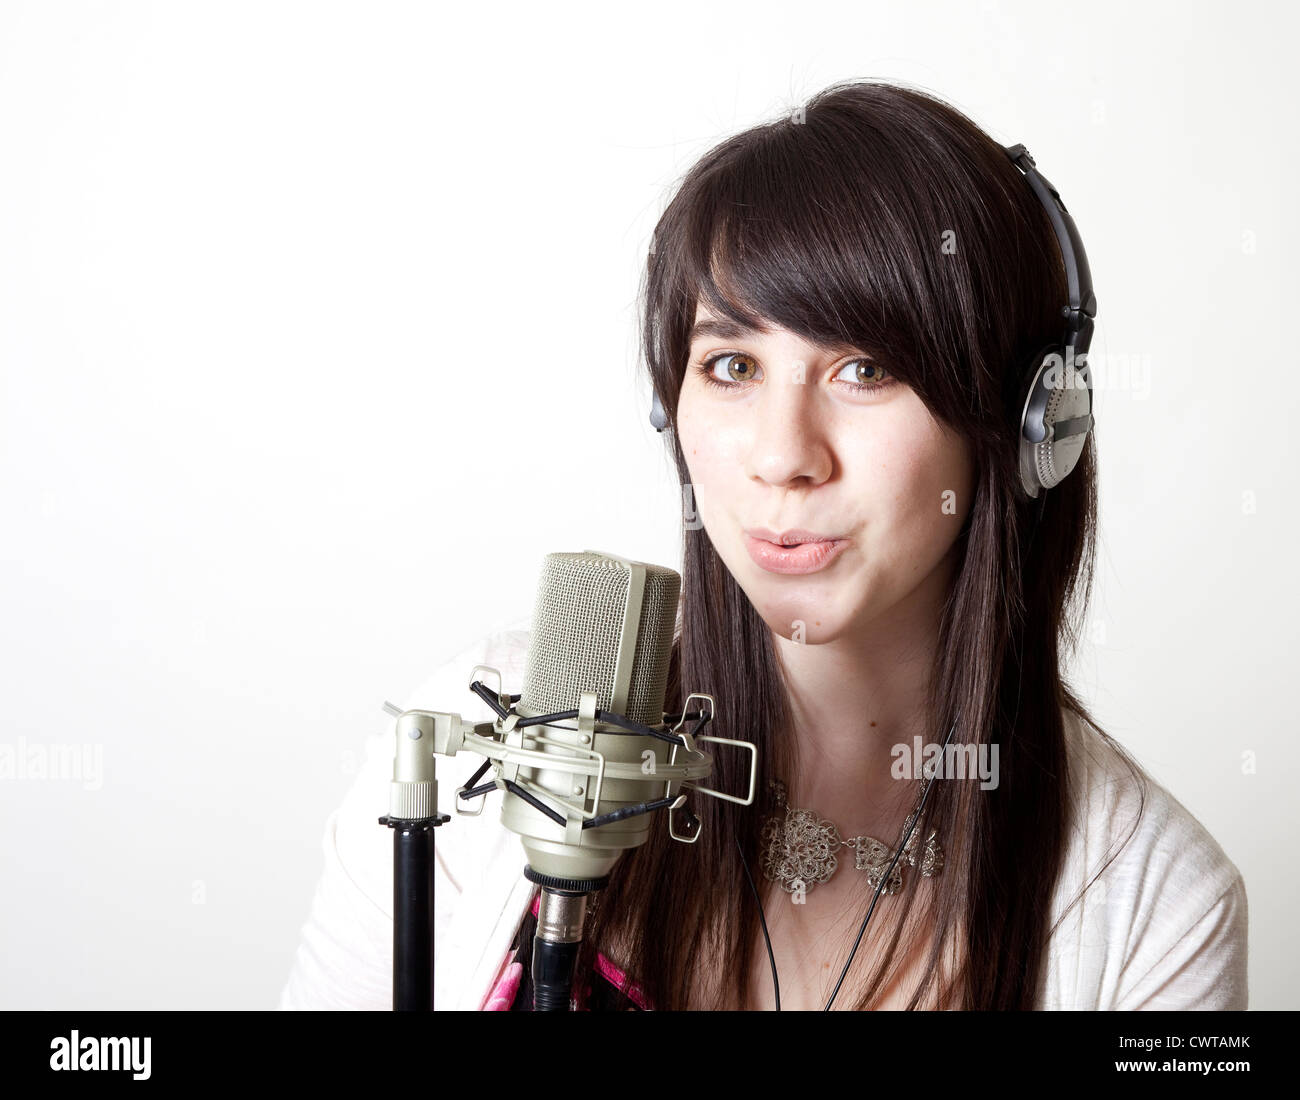 Ein hübsches Mädchen im Kopfhörer macht melodiöse Töne in ein Mikrofon. Stockfoto